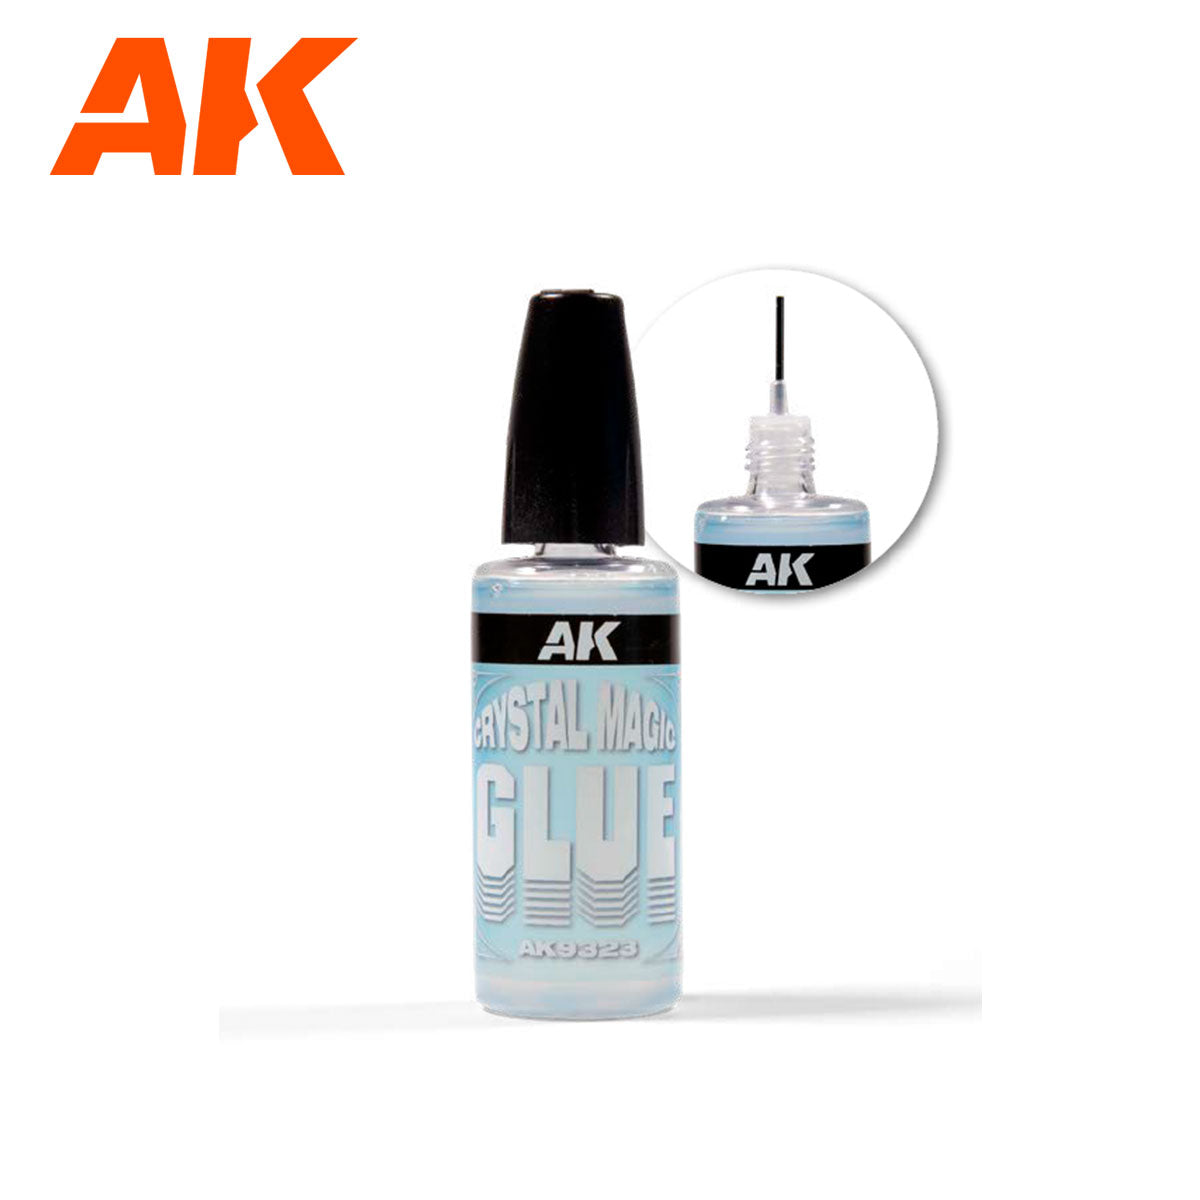 AK9323 - Crystal Magic Glue - 30ml